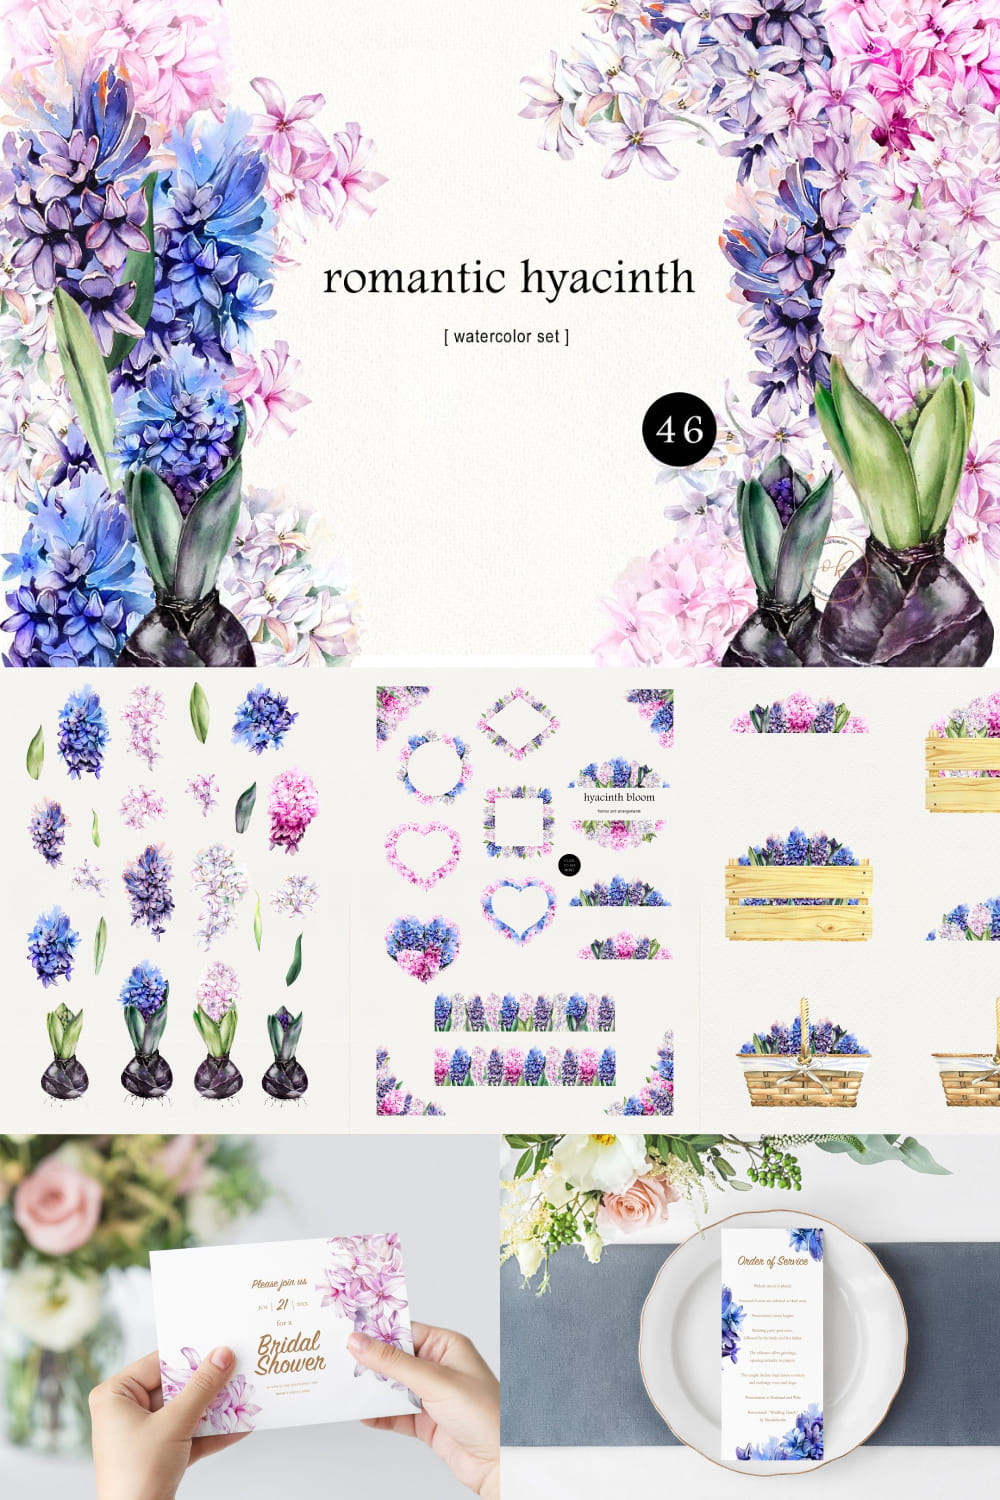 Romantic Hyacinths pinterest image.